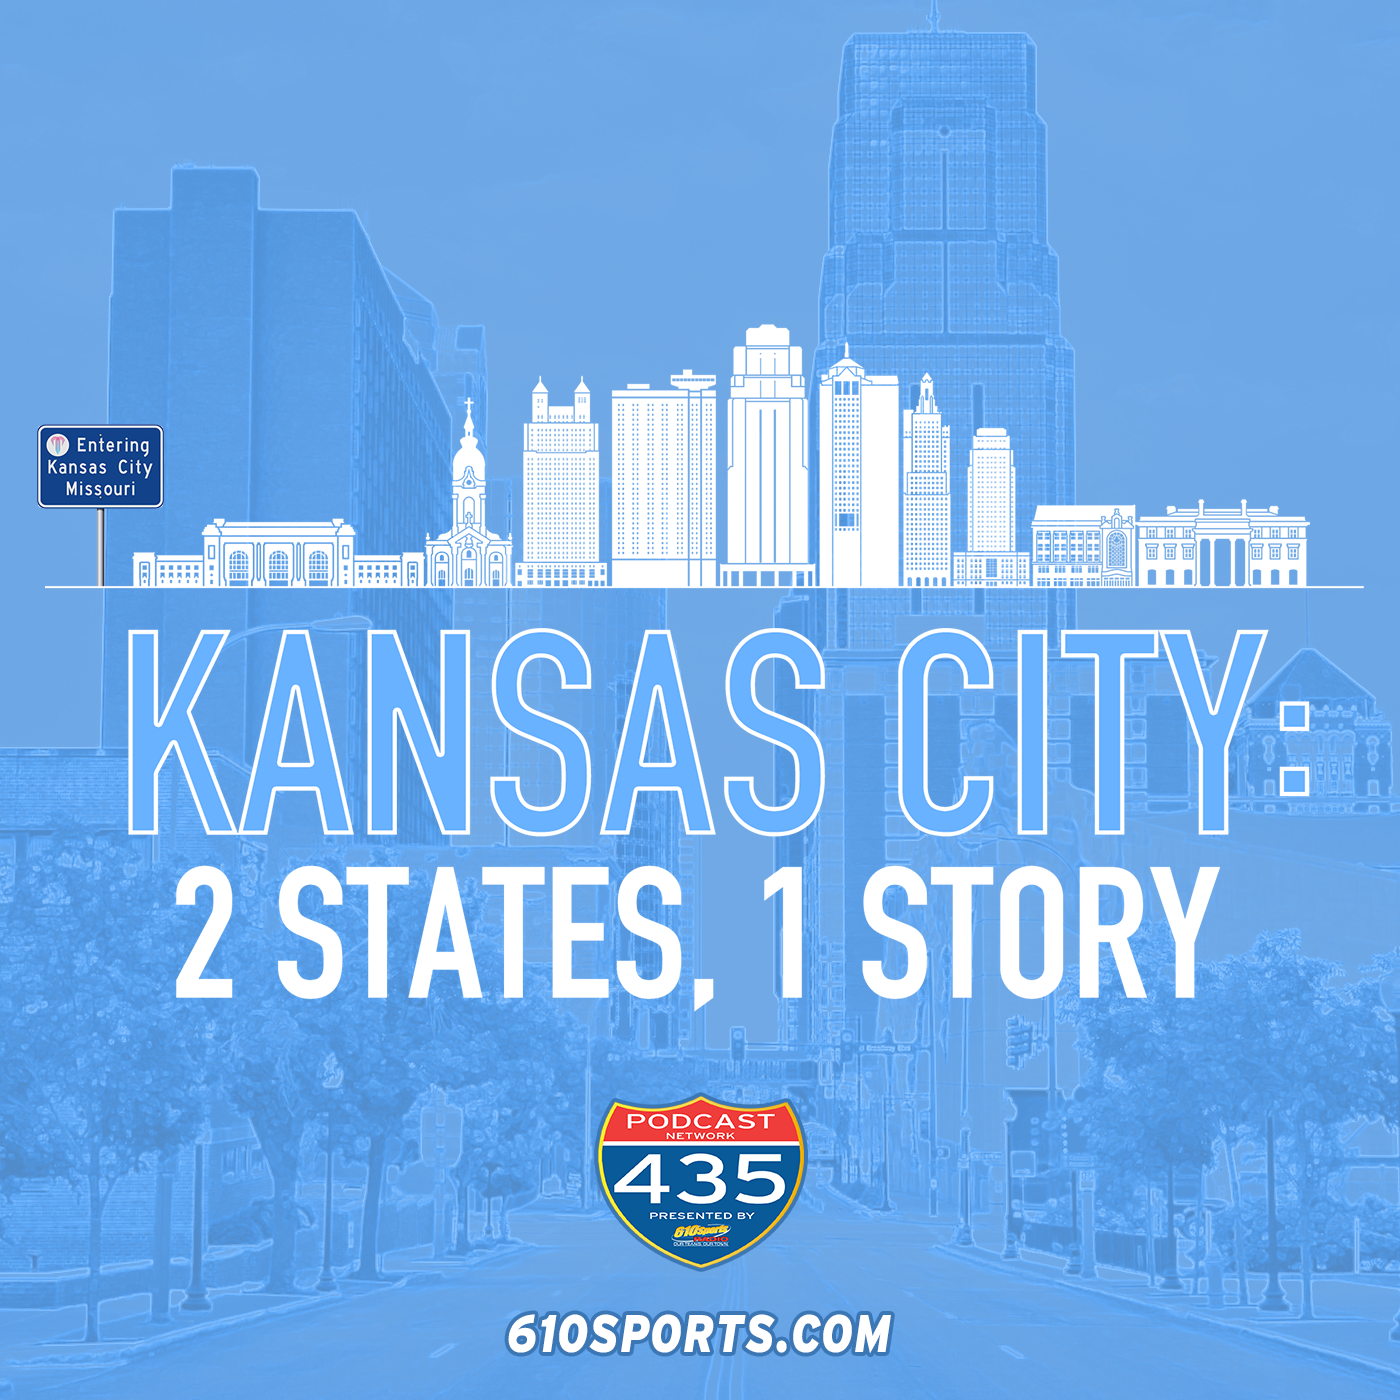 11/15 Kansas City: 2 States, 1 Story